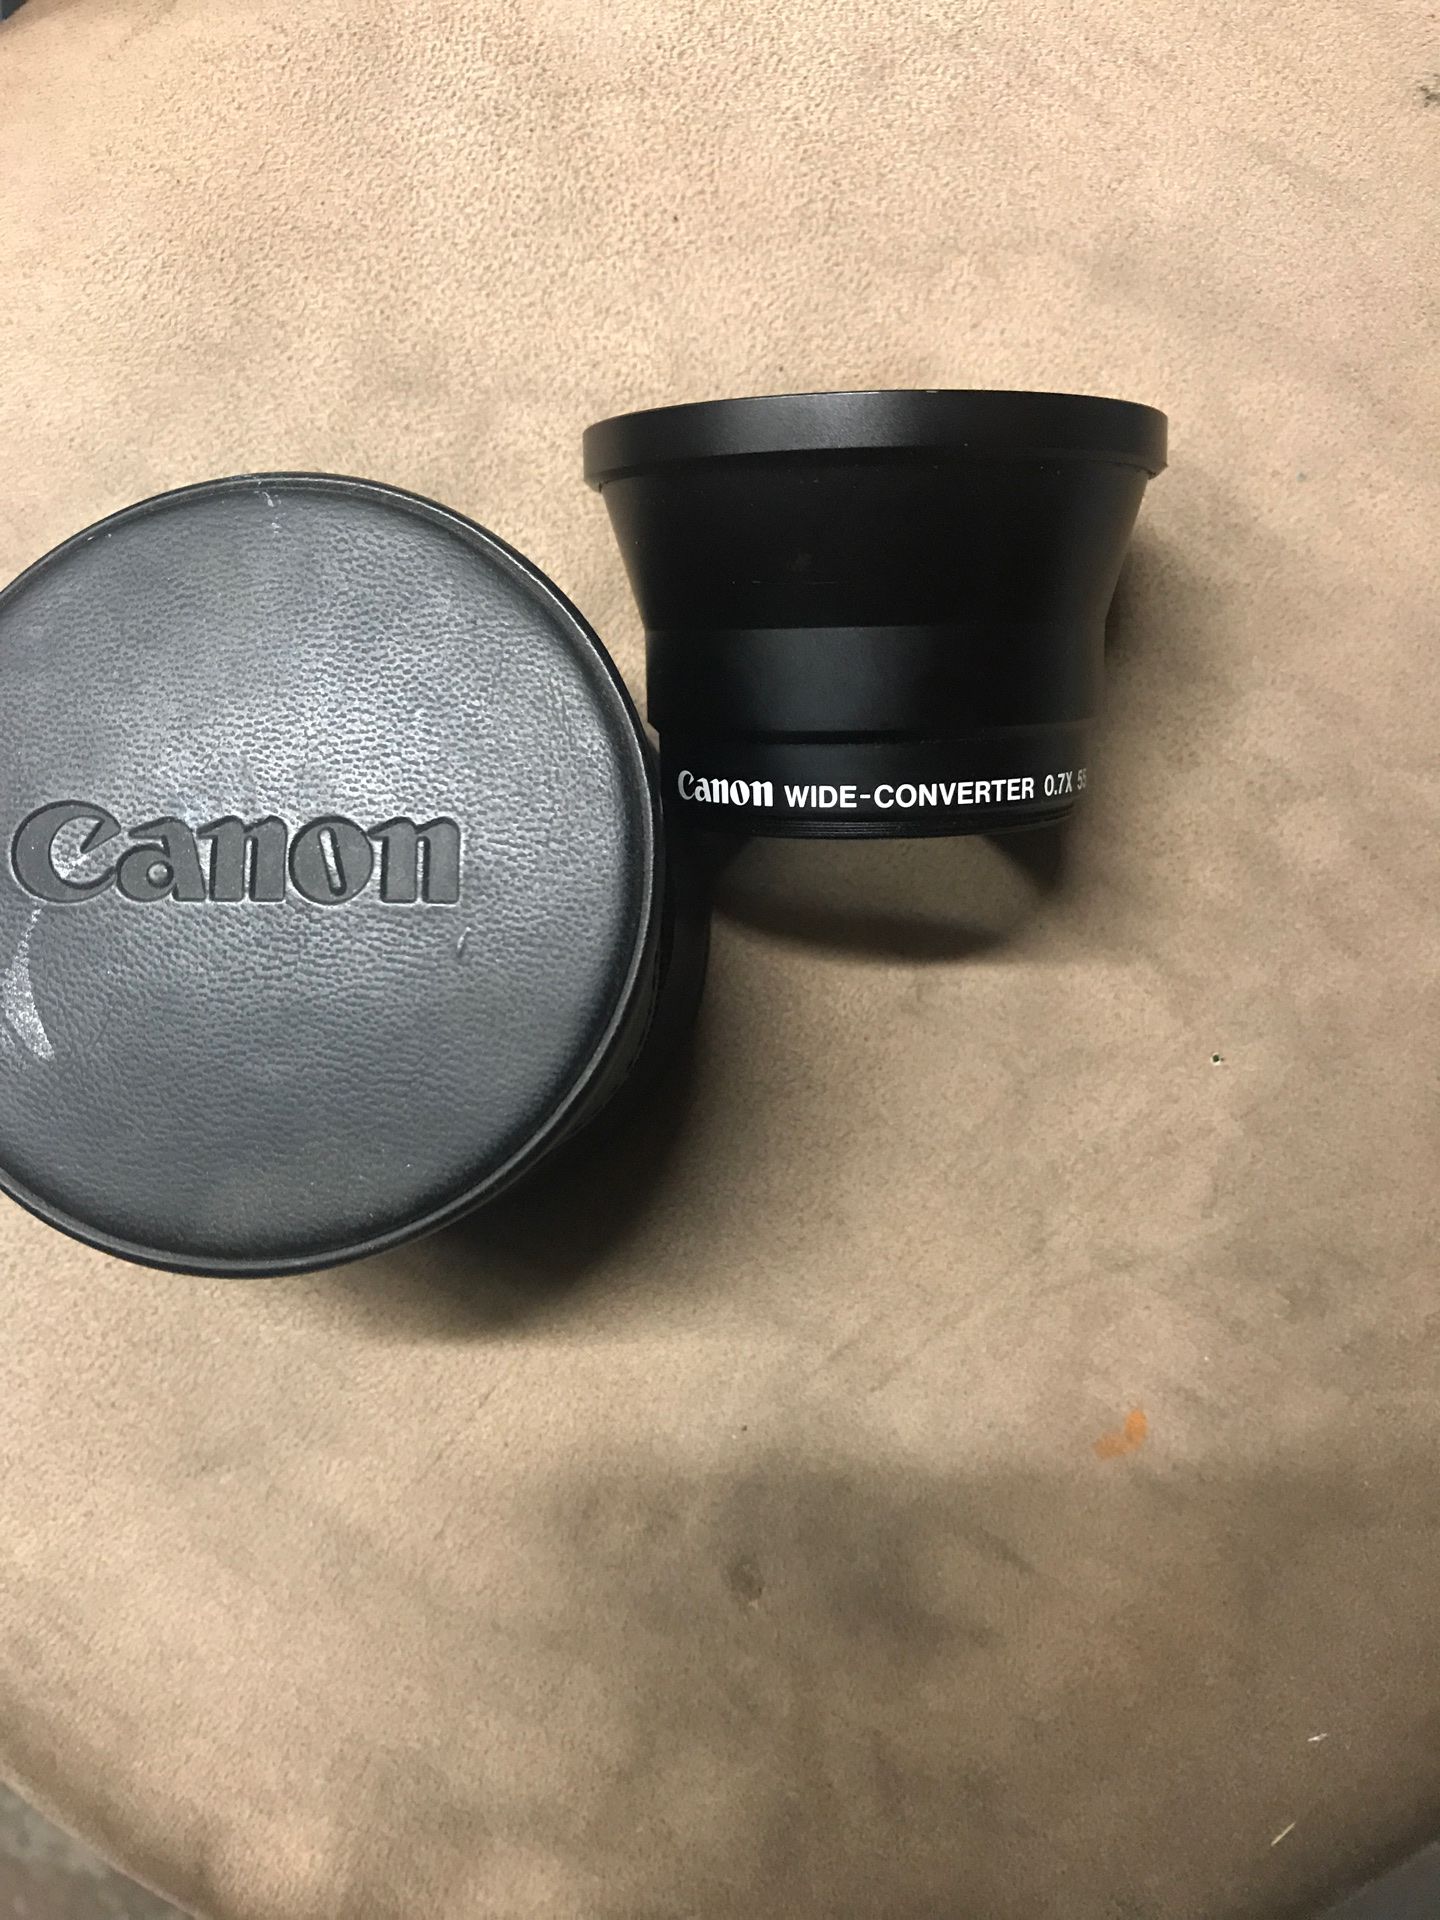 Cannon. Camera lens